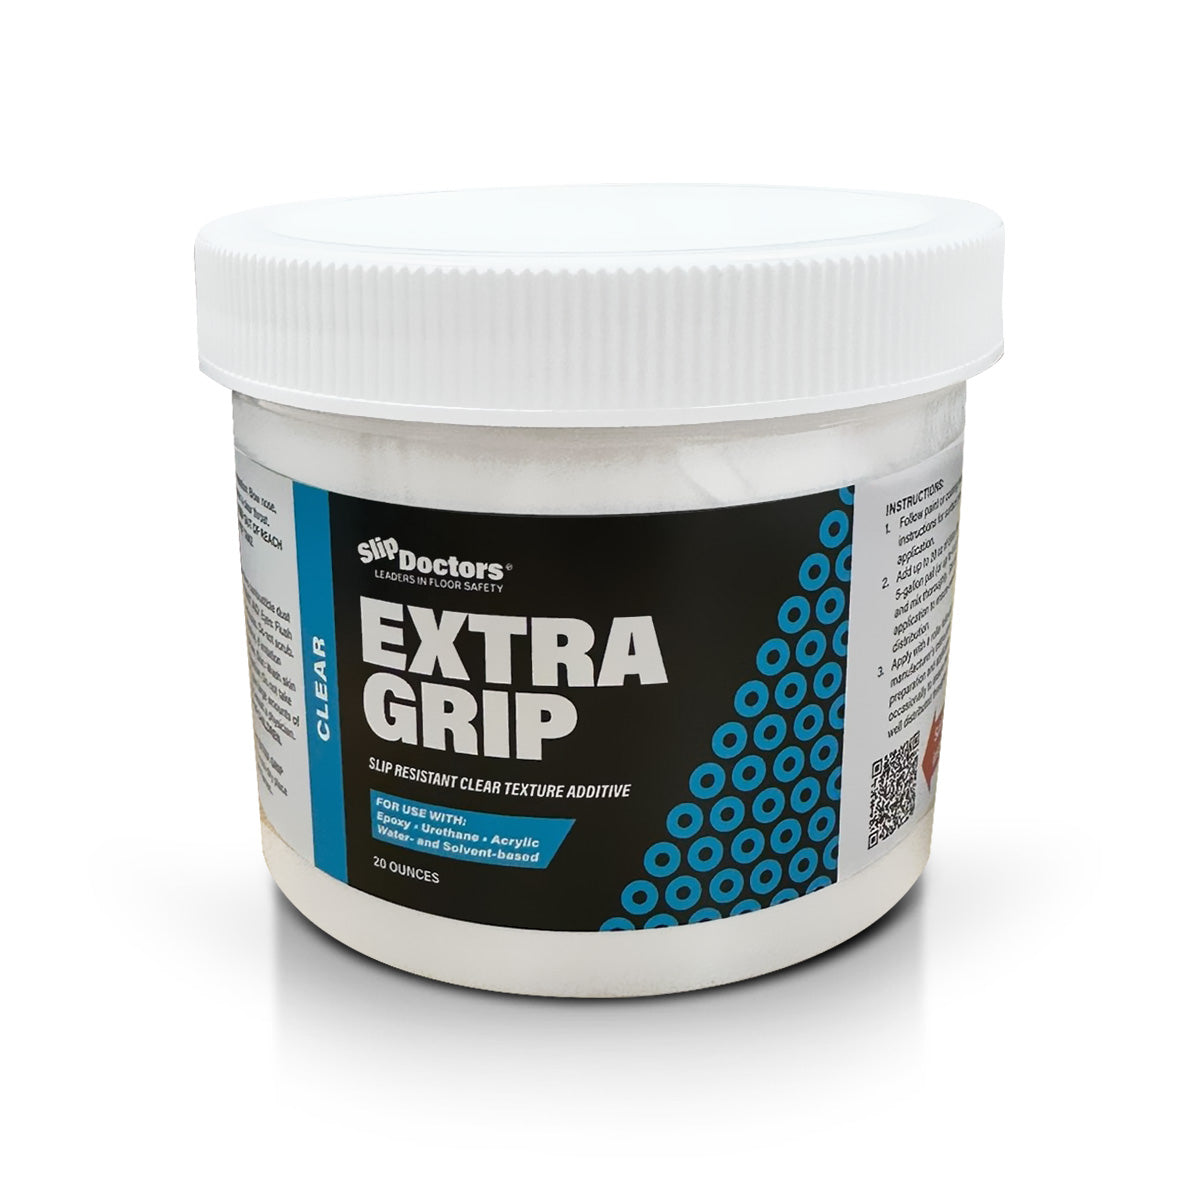 Sure Grip™ - Anti-Skid Additive – Professional Coatings Inc.